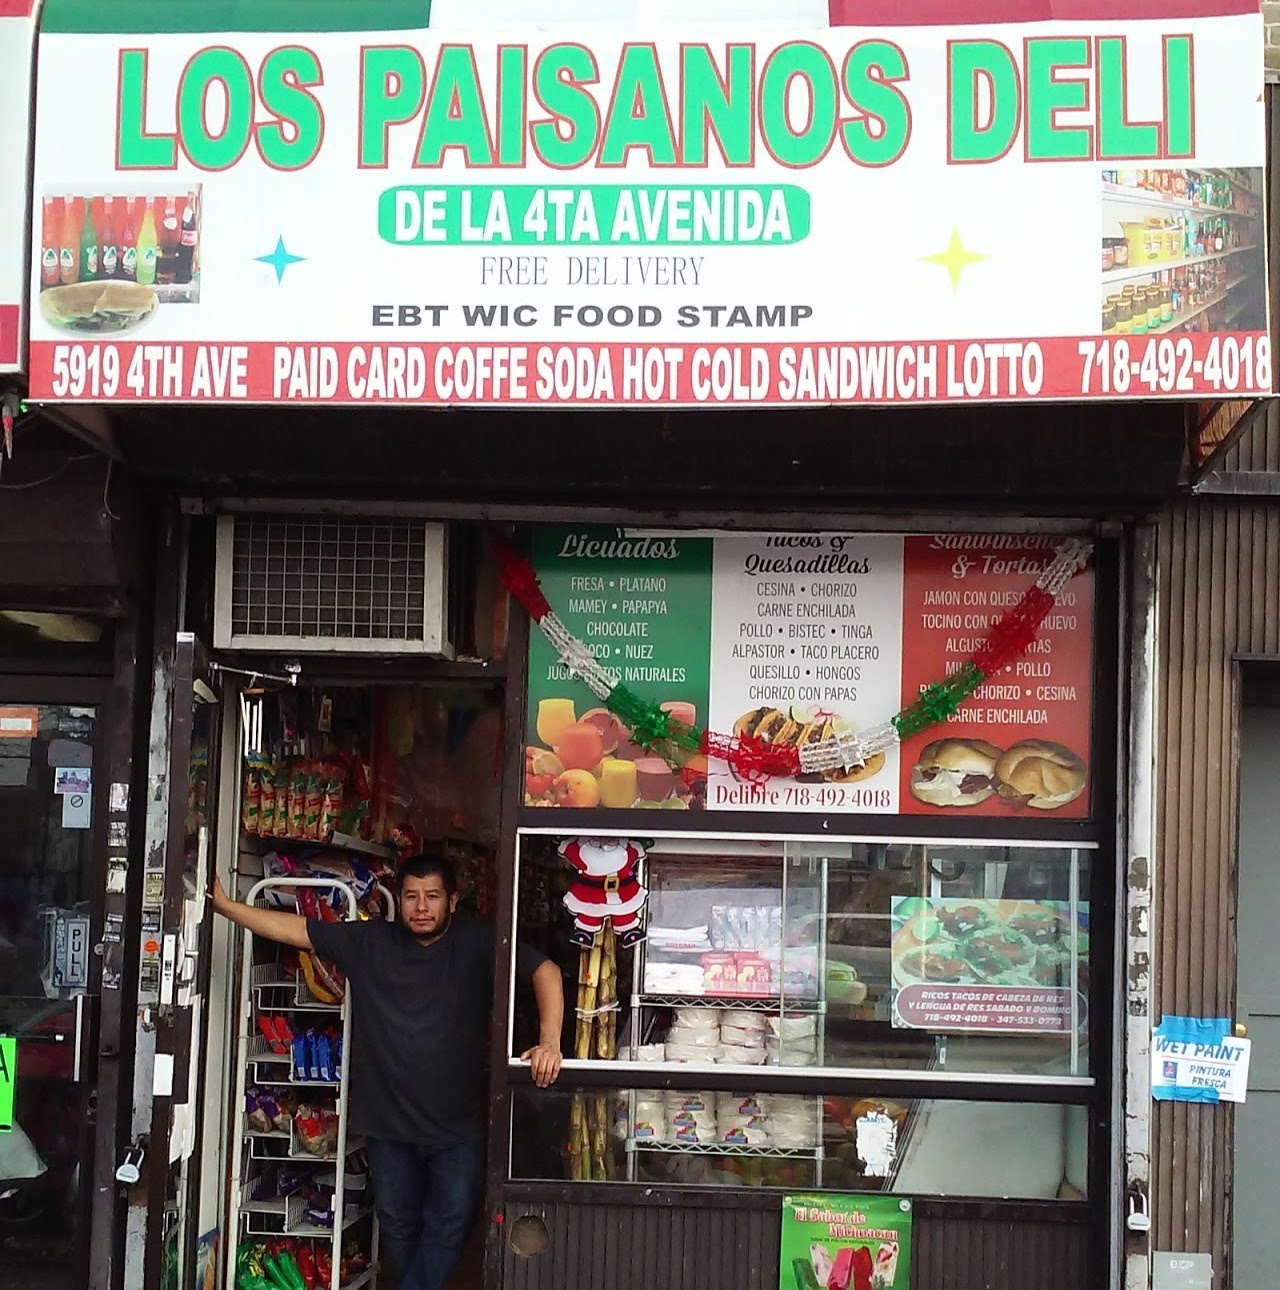 Photo of Los Paisanos Deli De La 4ta Avenida in Kings County City, New York, United States - 1 Picture of Food, Point of interest, Establishment, Store